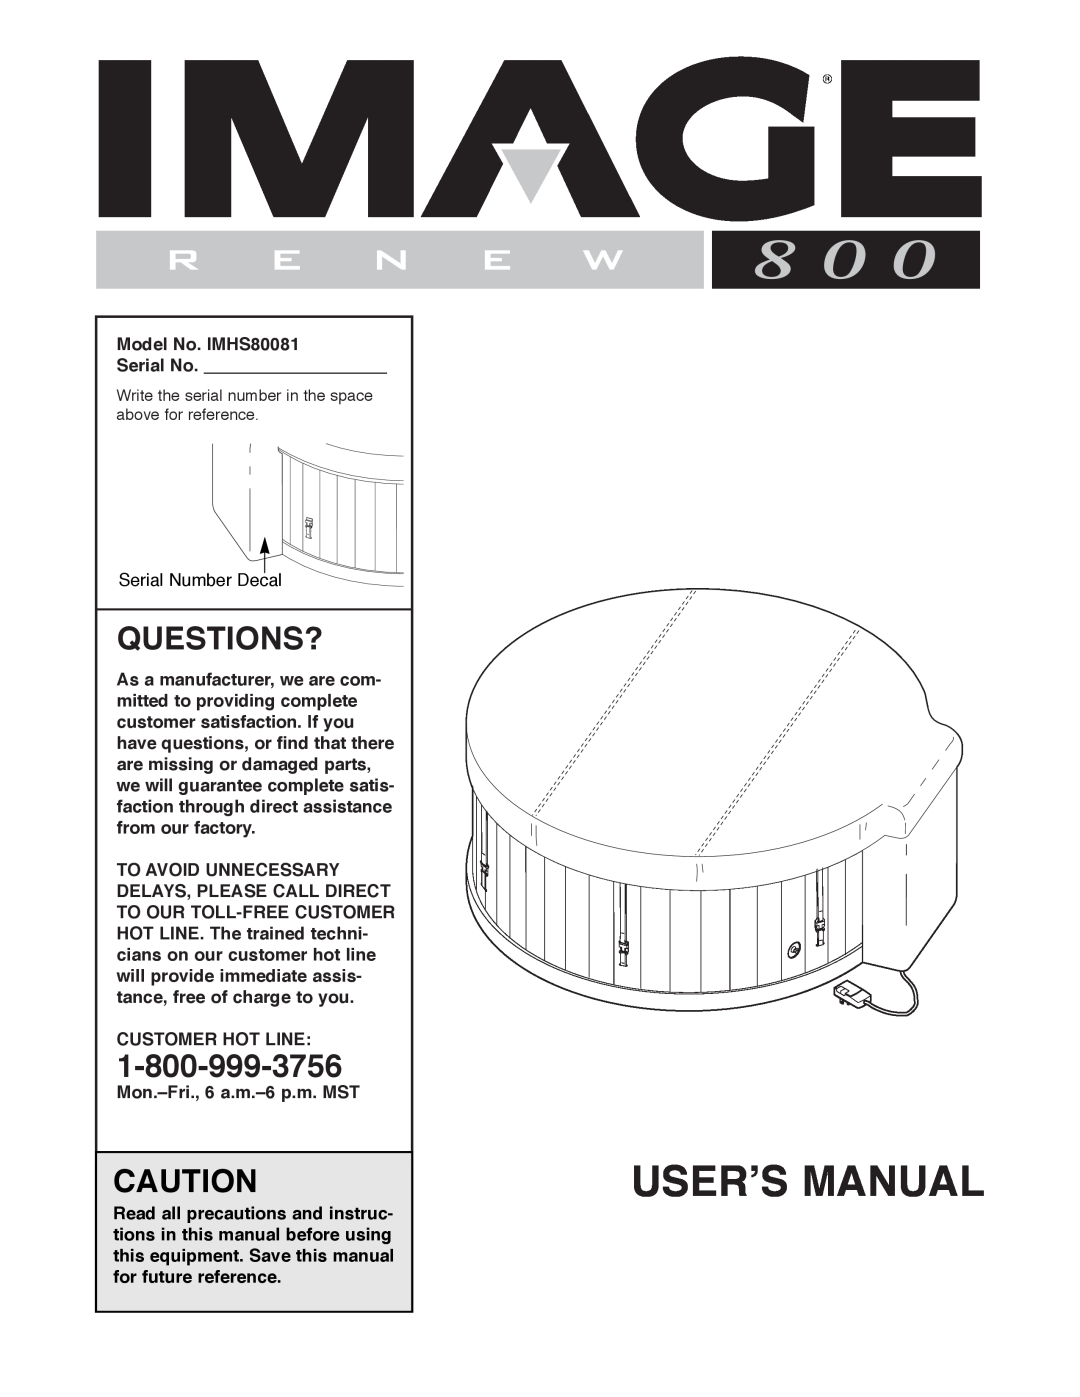 Image IMHS80081 manual Questions?, Userõs Manual 